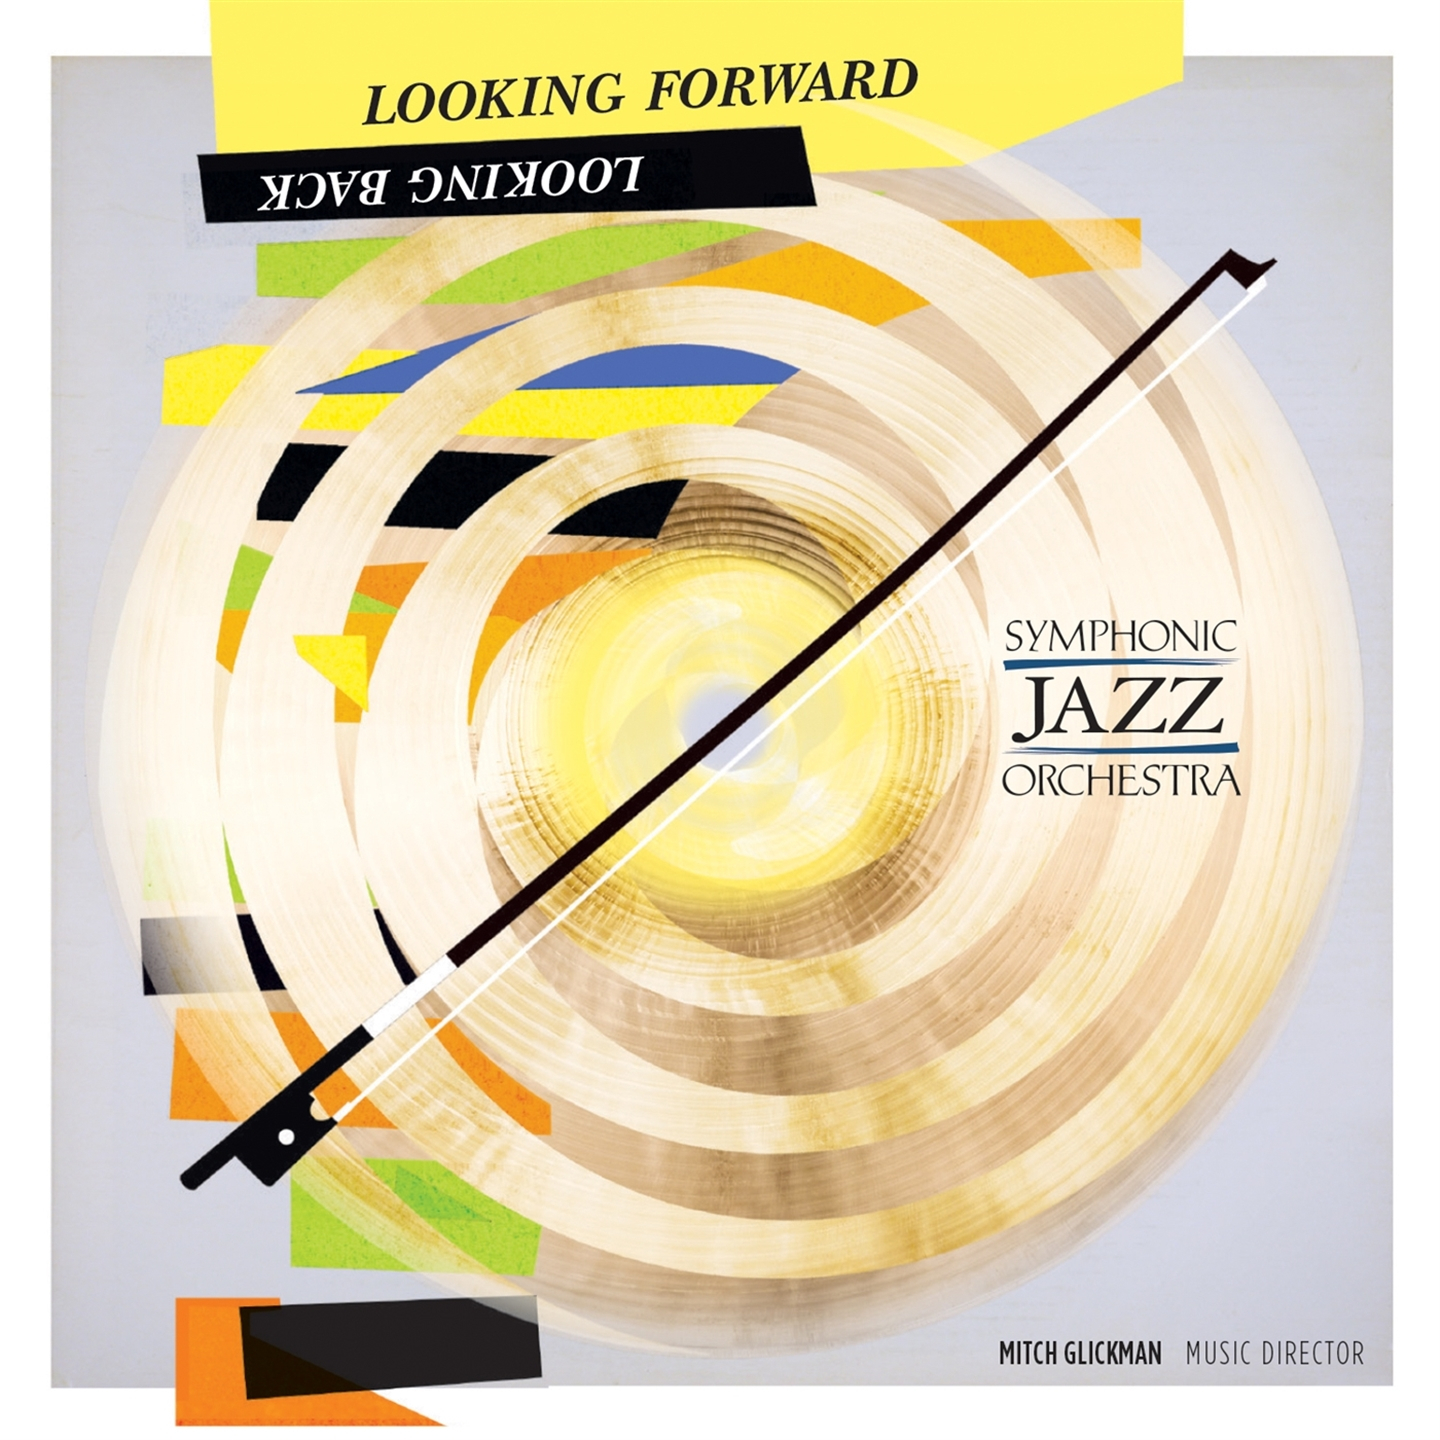 Symphonic Jazz Orchestra - Looking Forward, Looking Back - Foto 1 di 1